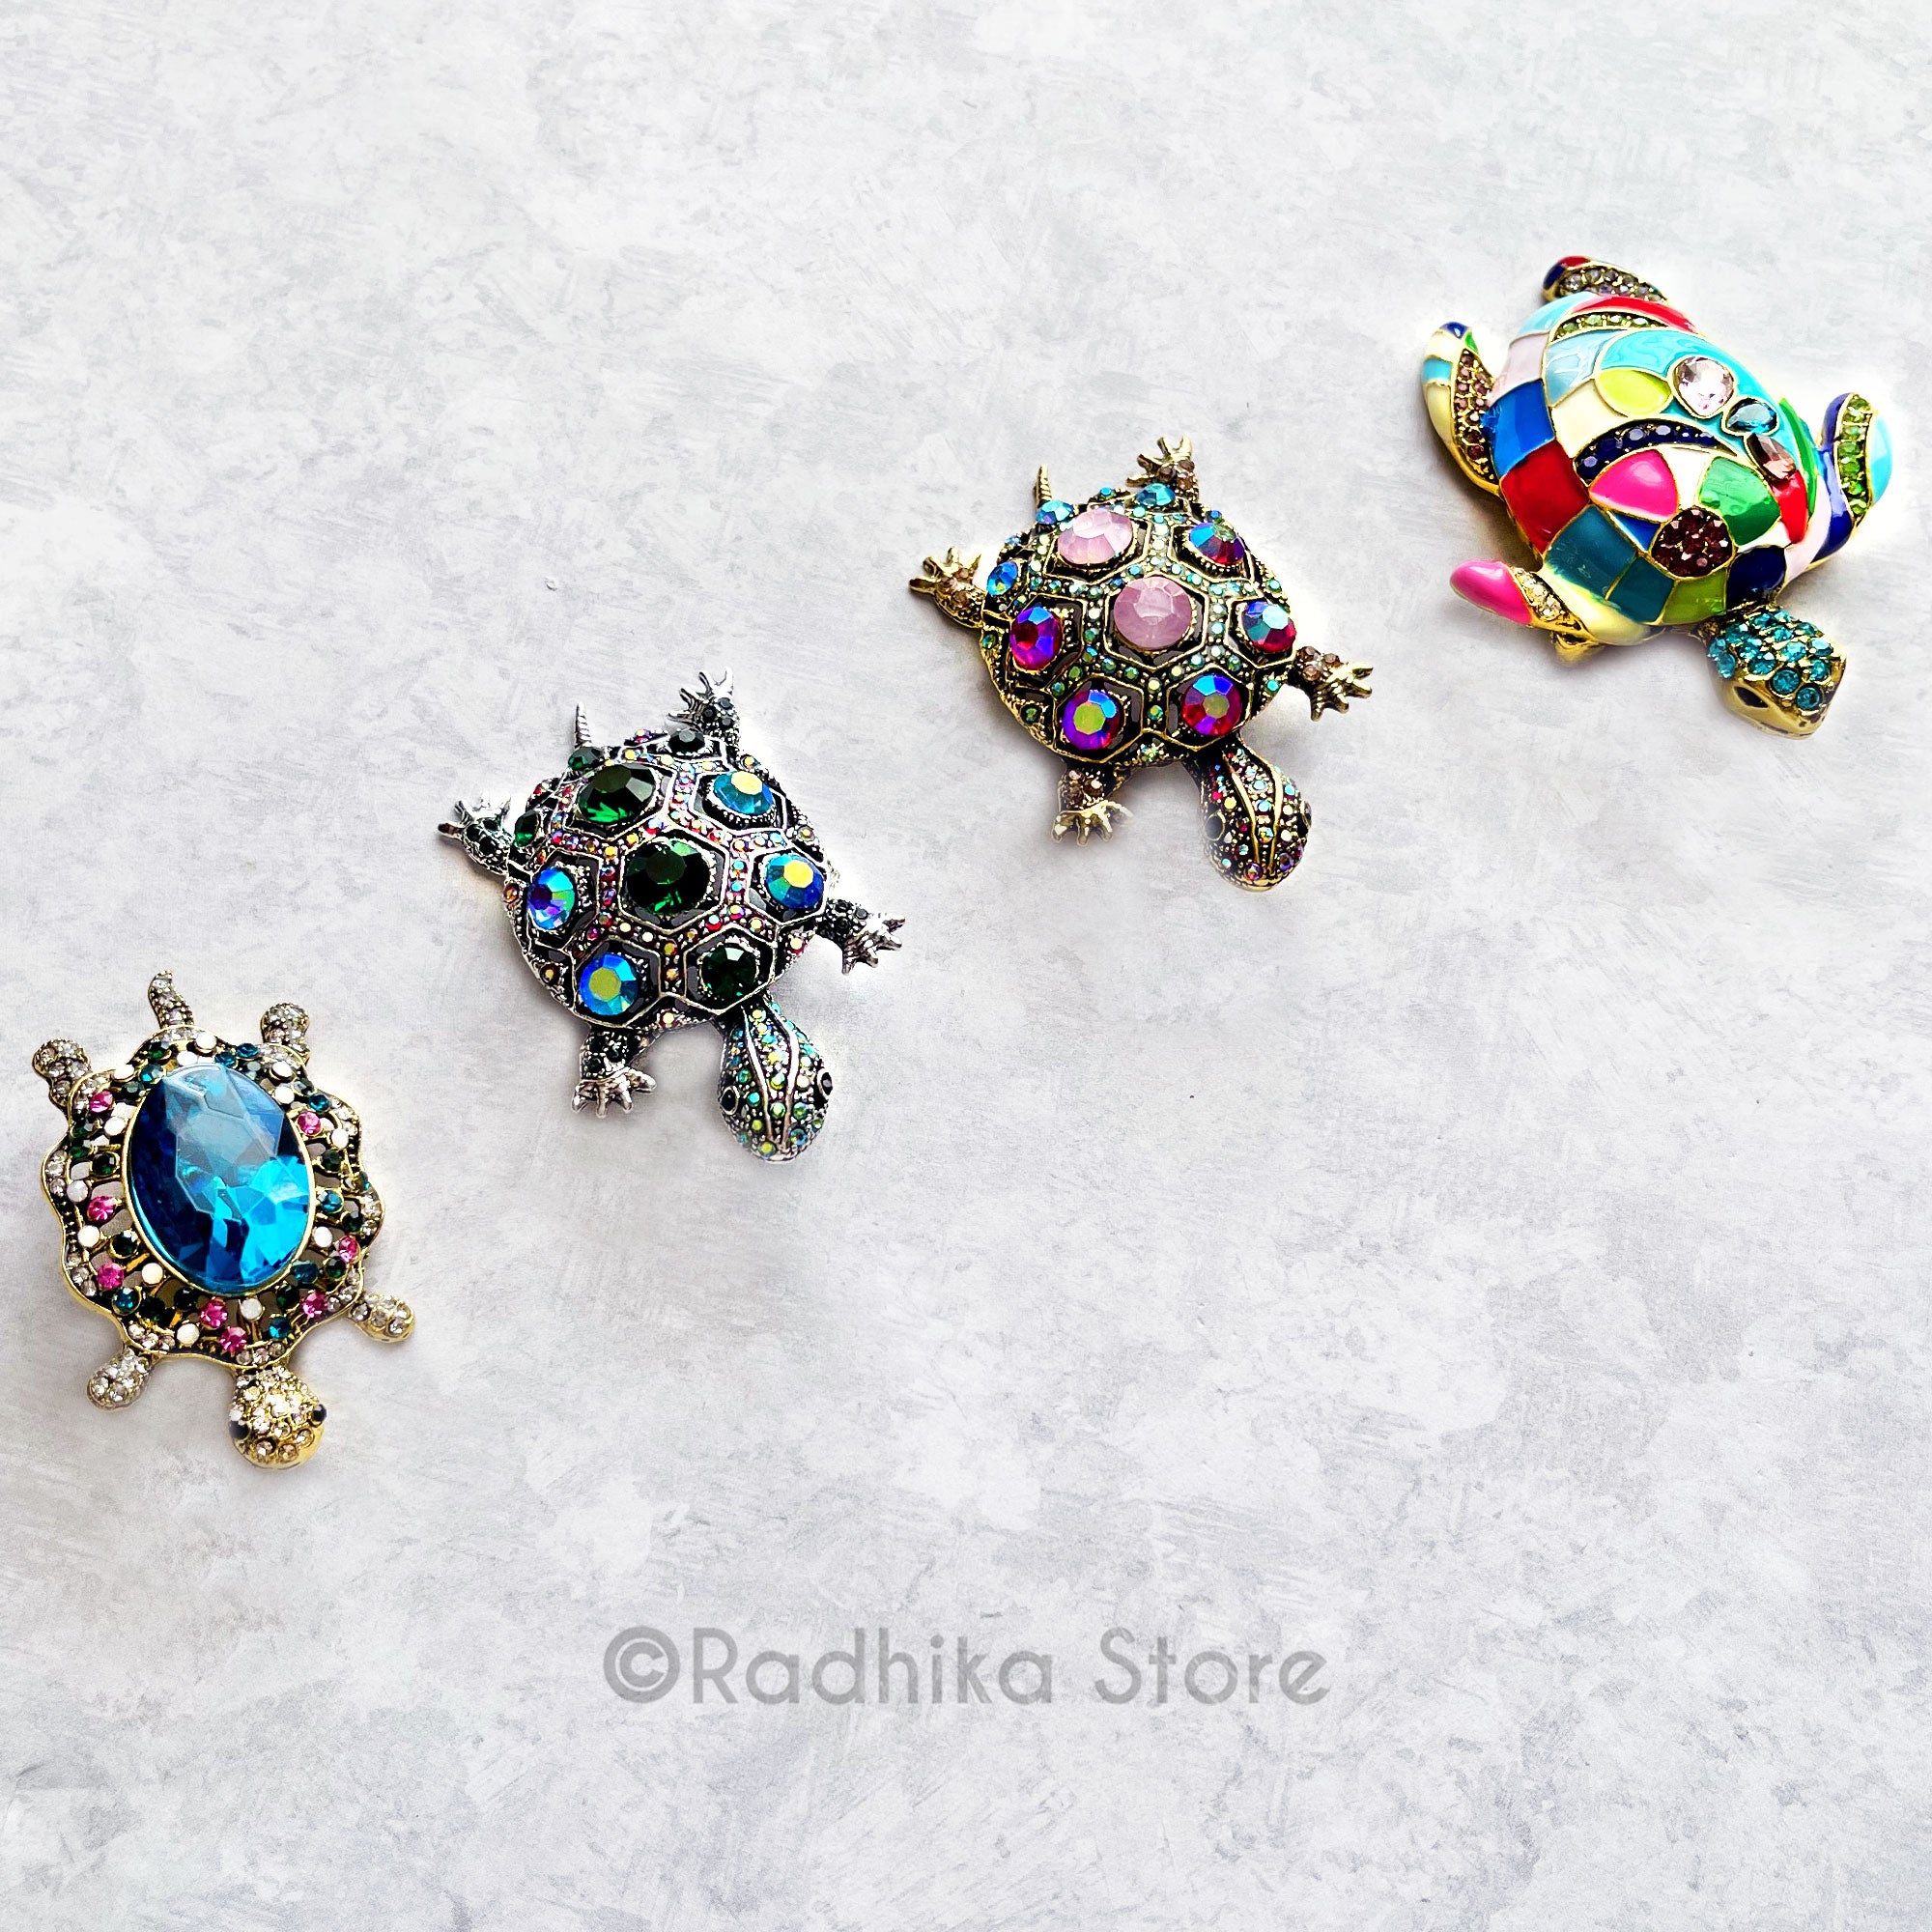 Radha Kund Turtles-Pendant-(Pin)- Choose Color